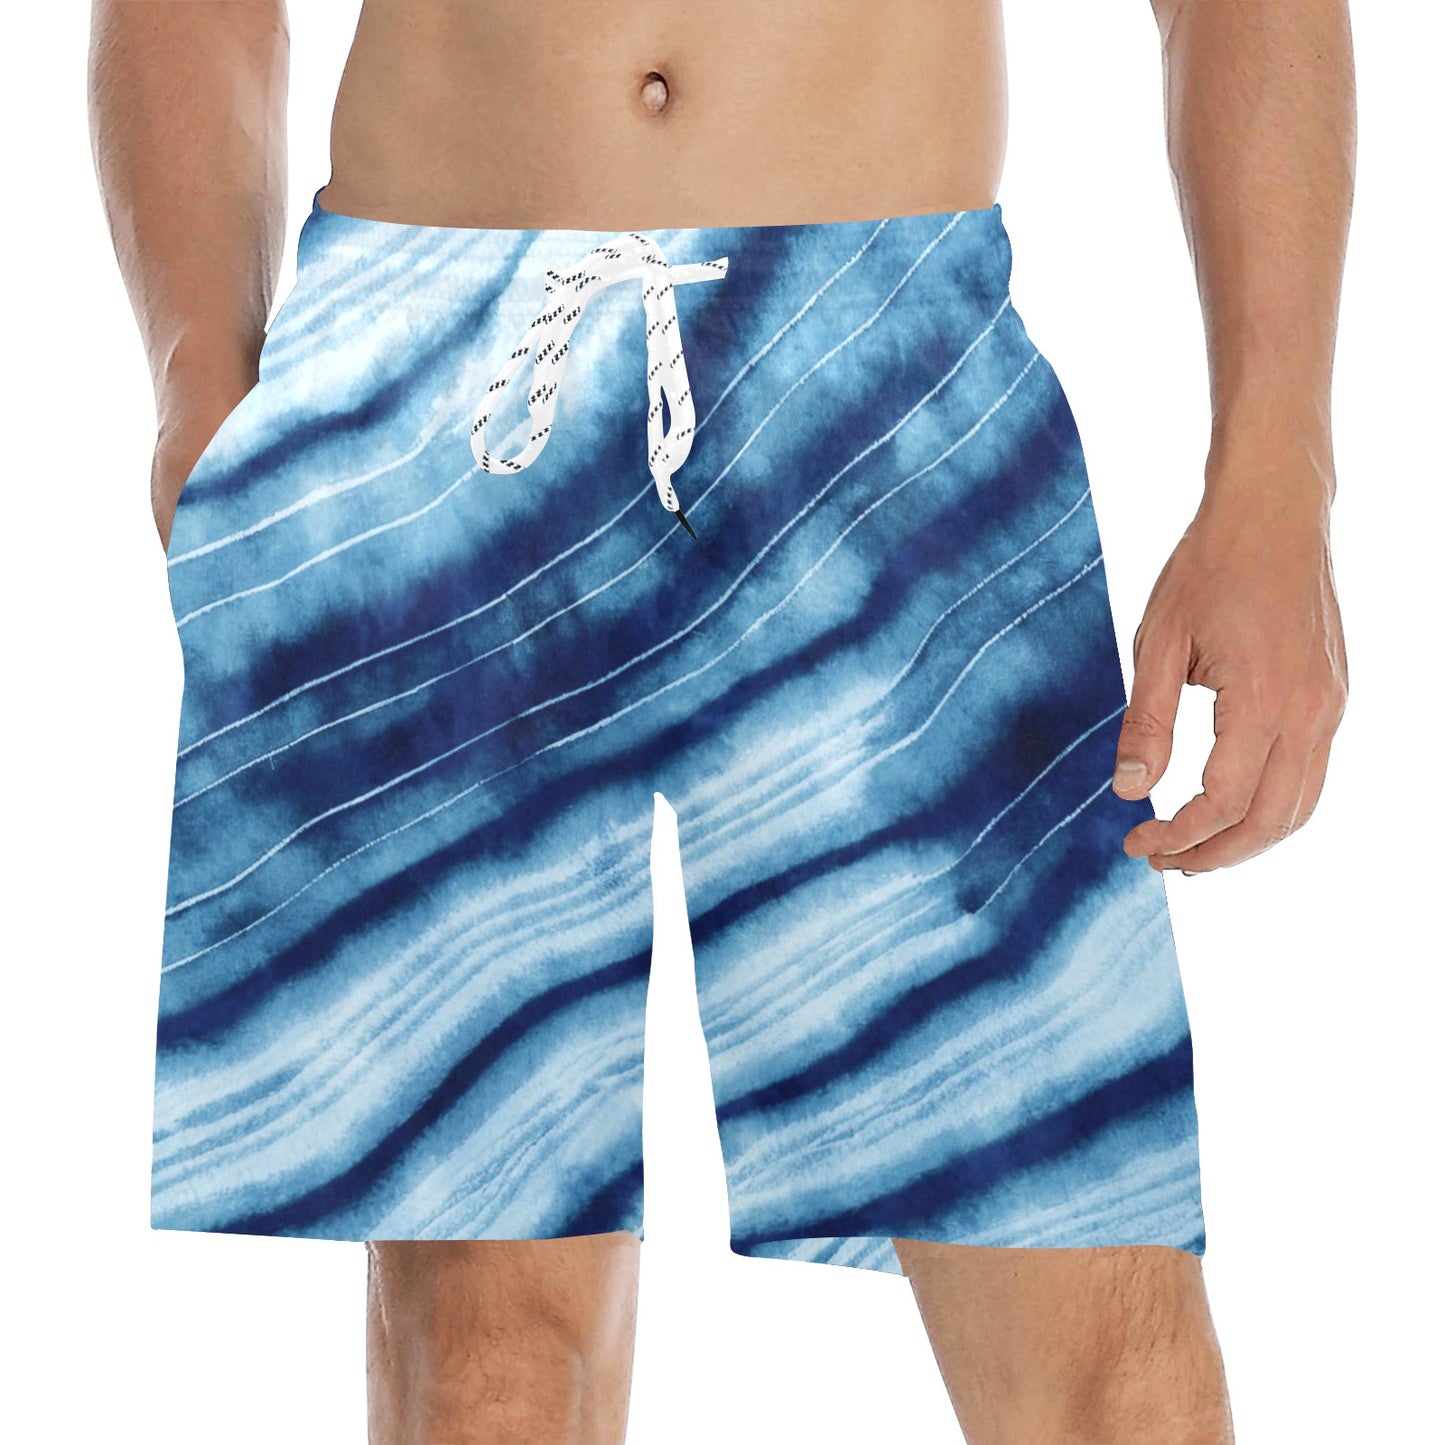 Tie Dye Men Swim Trunks, Blue Shibori Mid Length Shorts Beach Pockets Mesh Lining Drawstring Boys Casual Bathing Suit Plus Size Swimwear